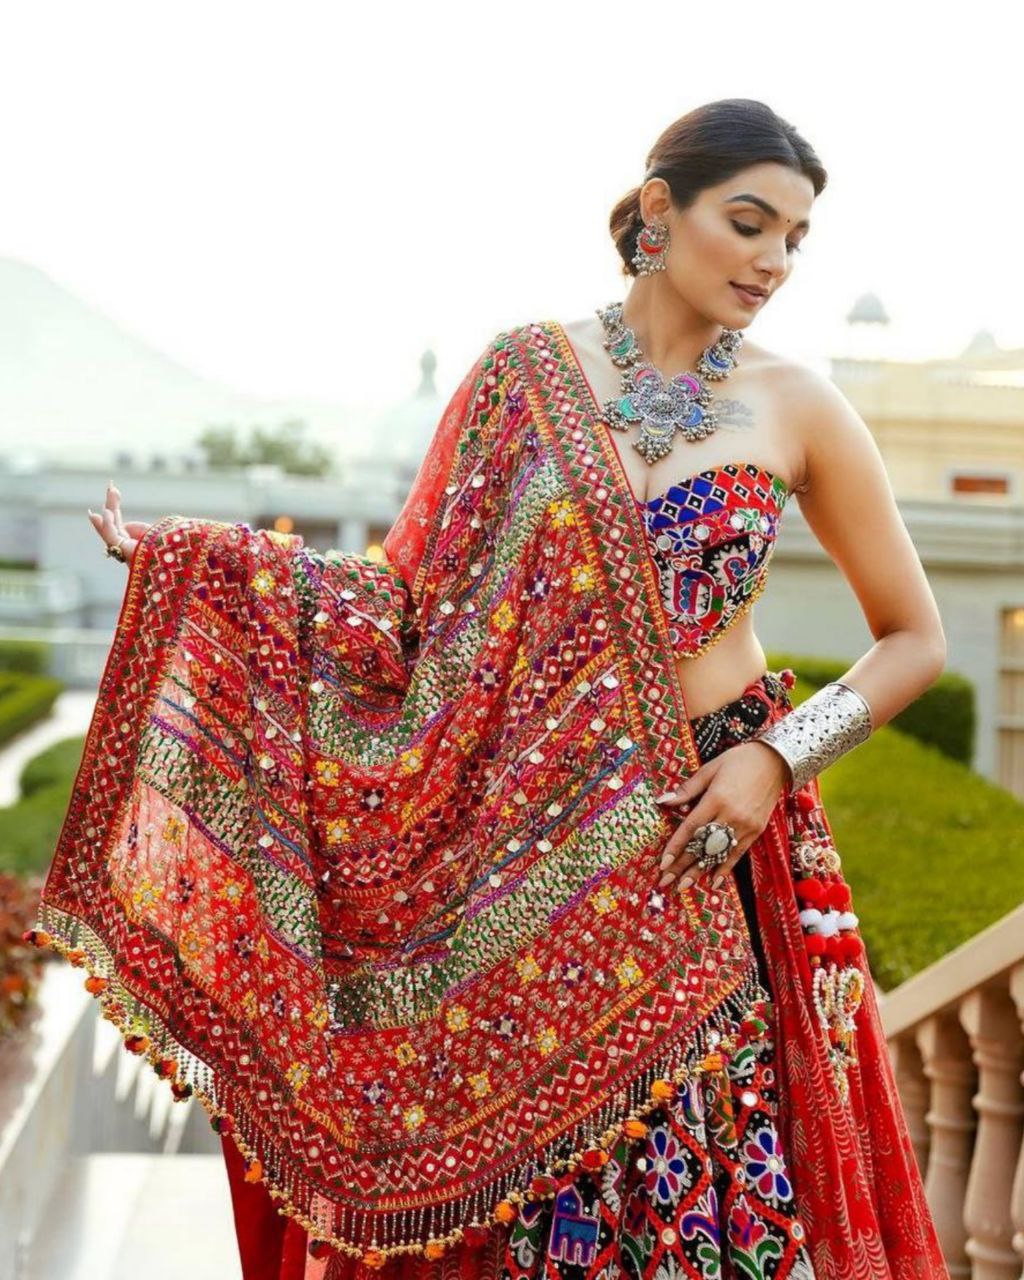 Red Silk Bridal Wedding Lehenga Choli With Heavy Embroidery AA114